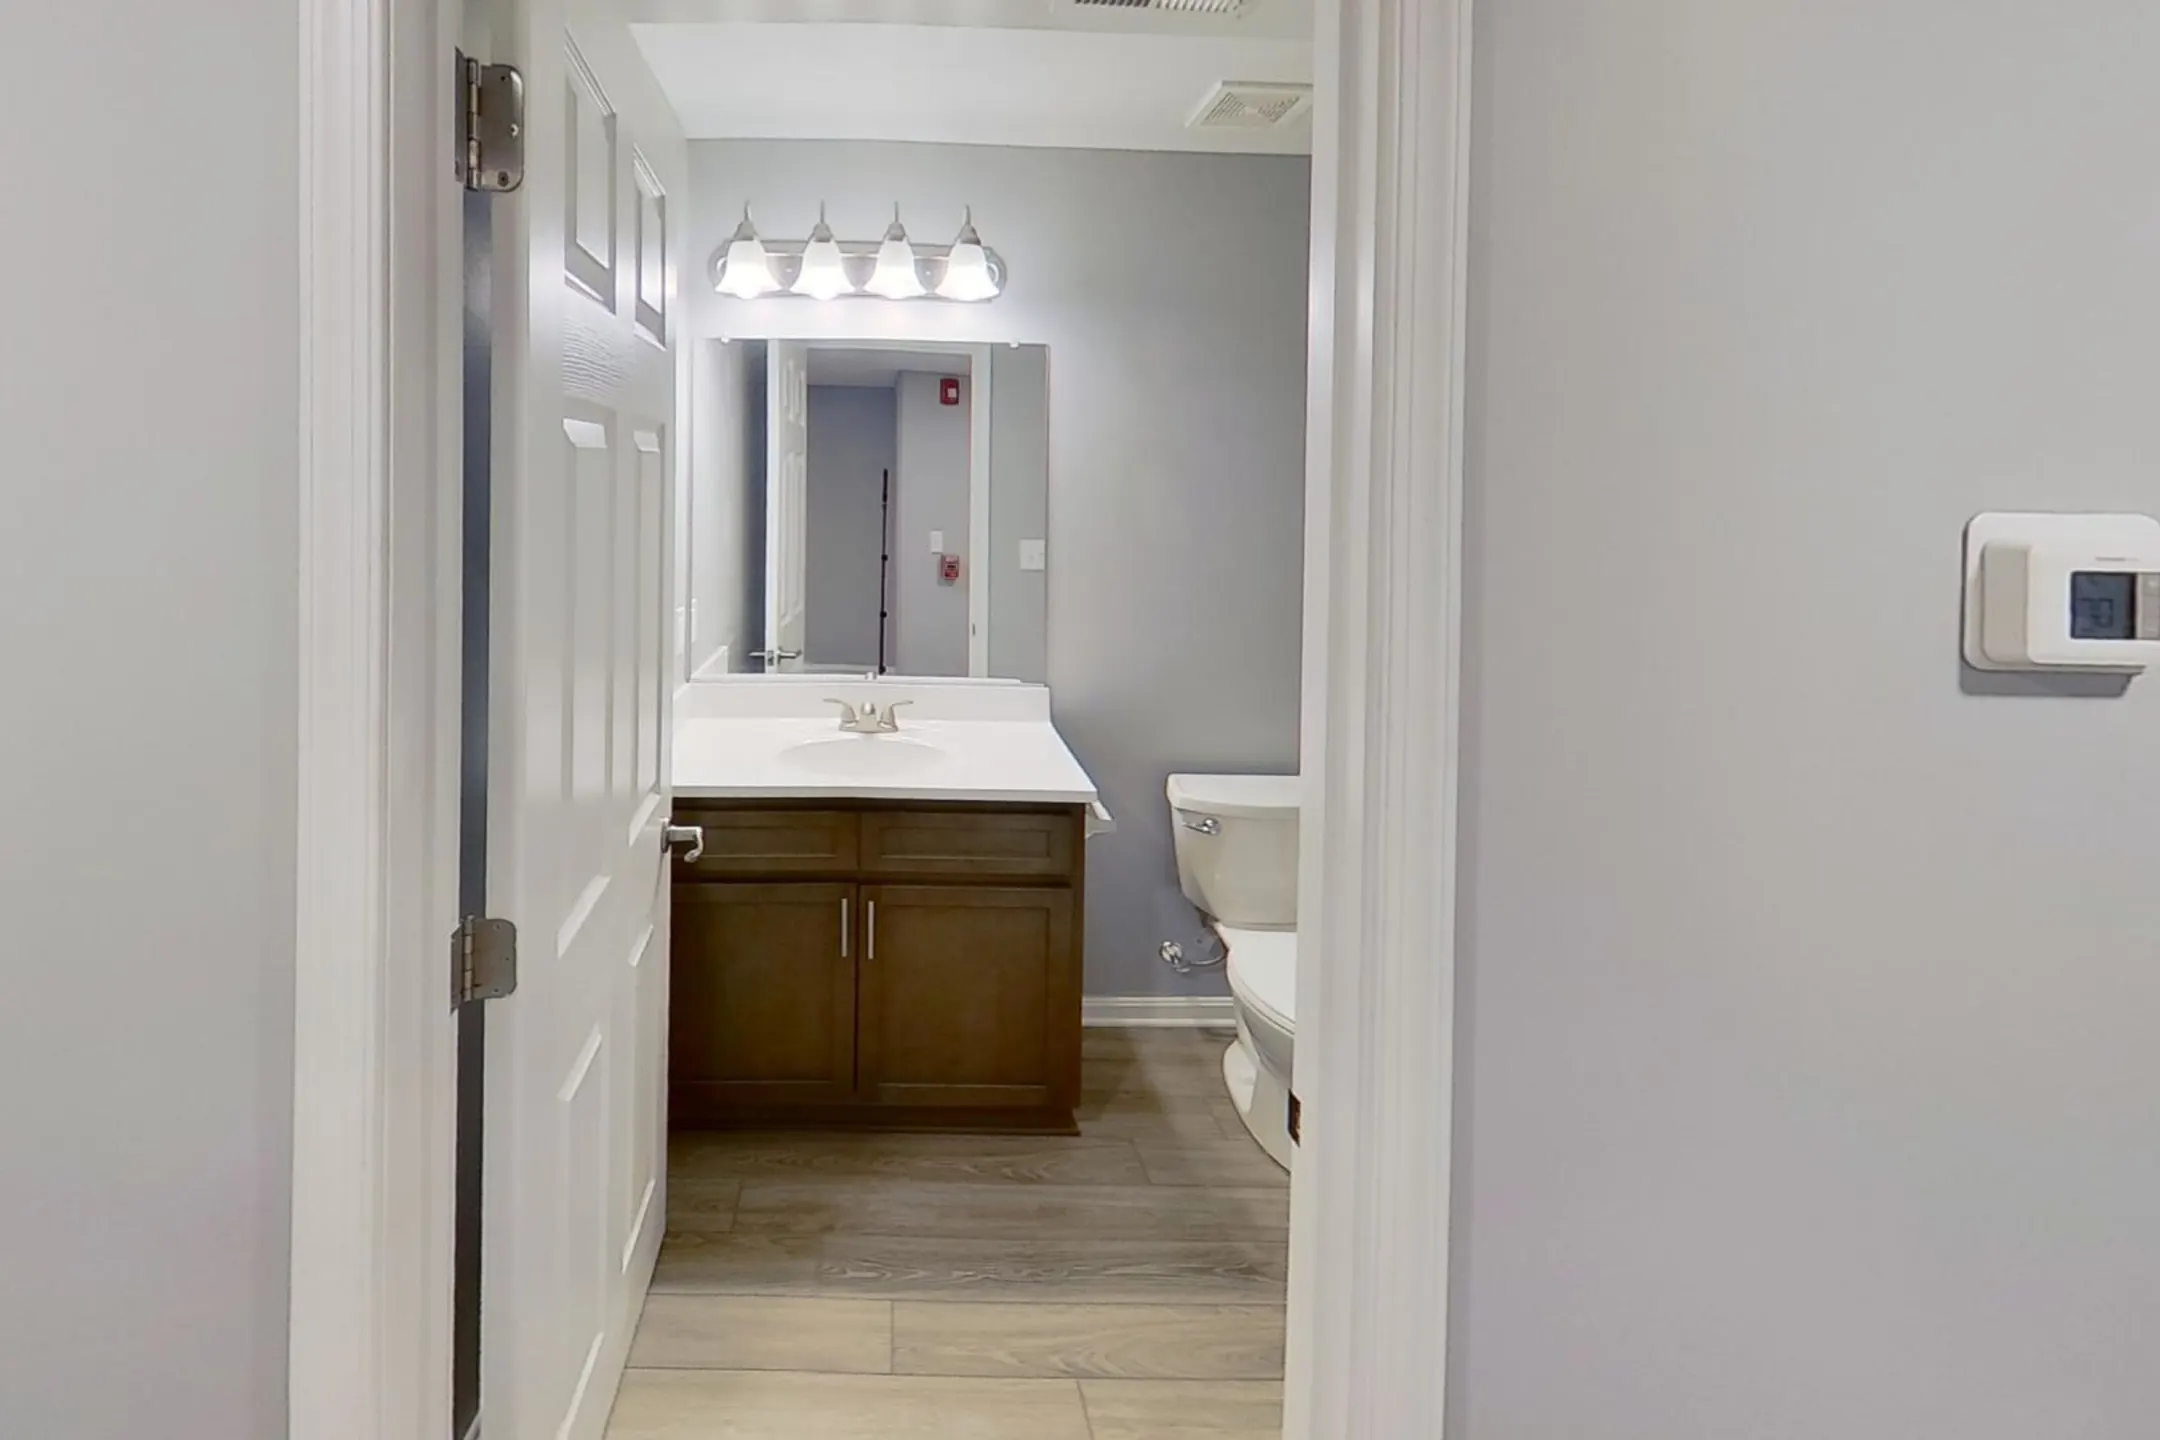 Bathroom - Mount Vernon Apartments - Baltimore, MD